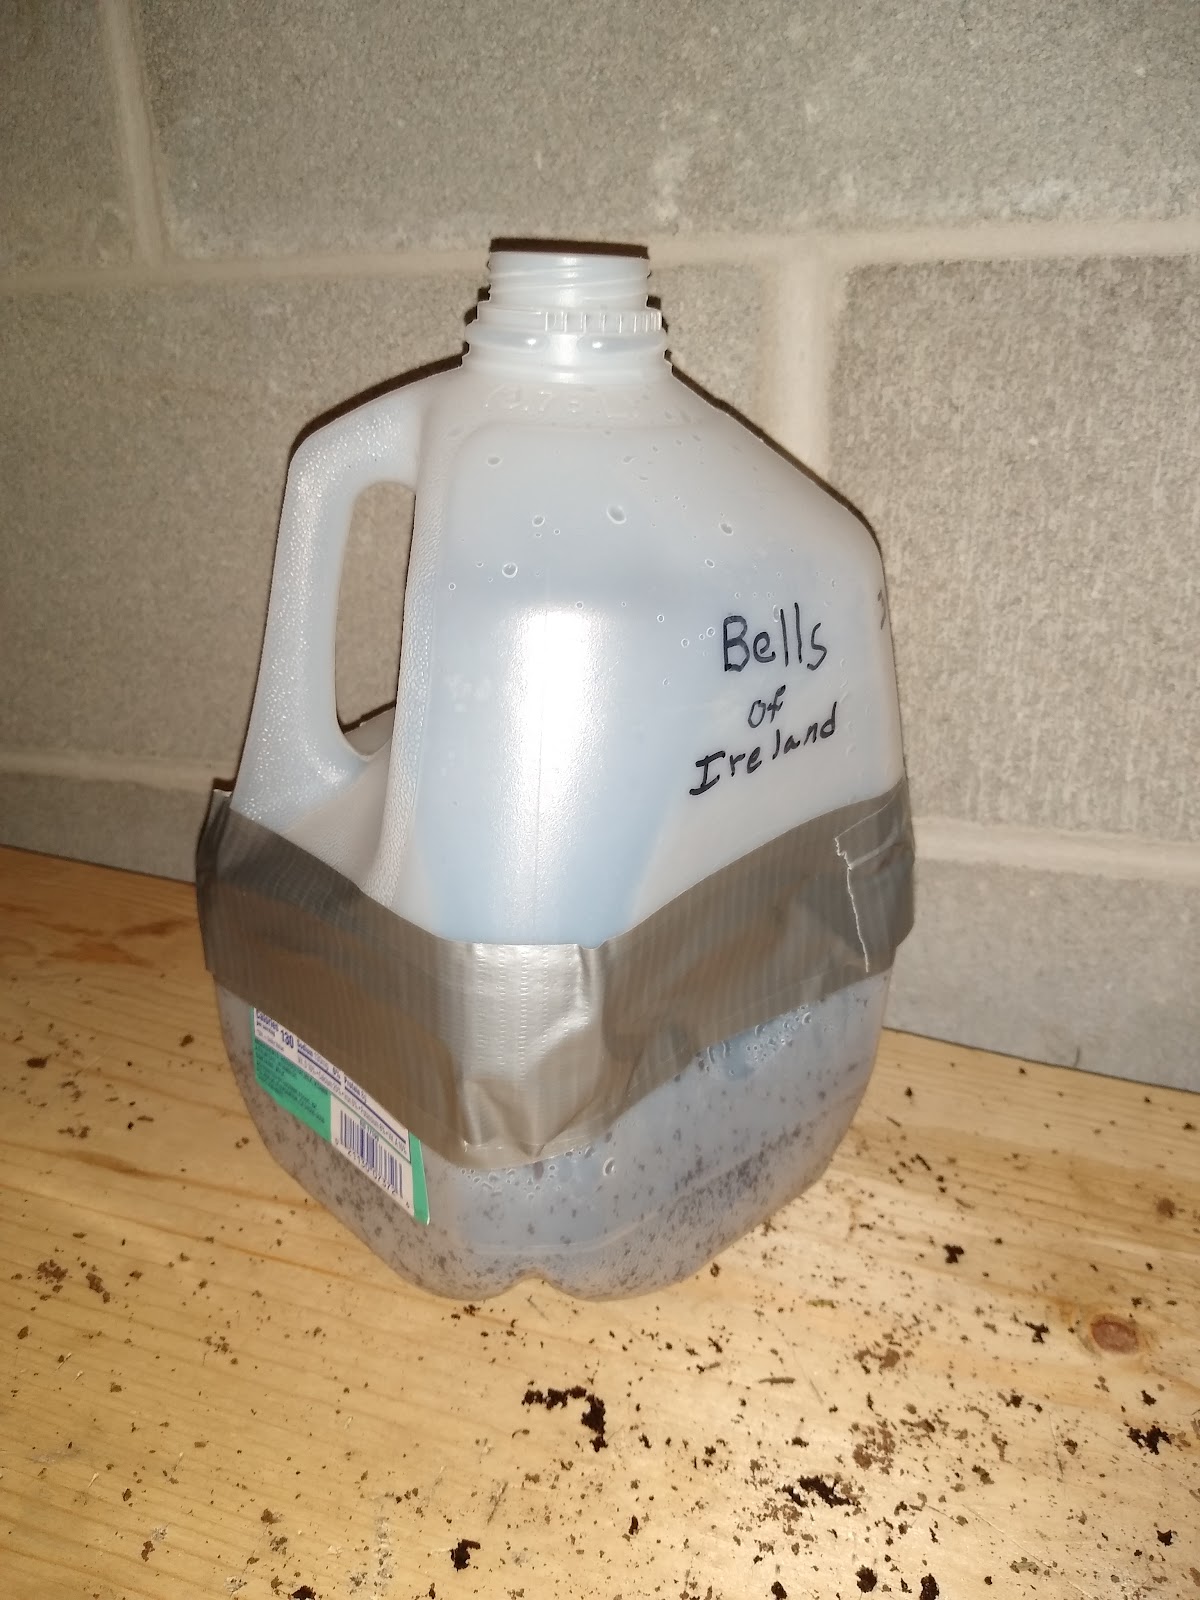 winter sown Bells of Ireland seeds in a milk jug